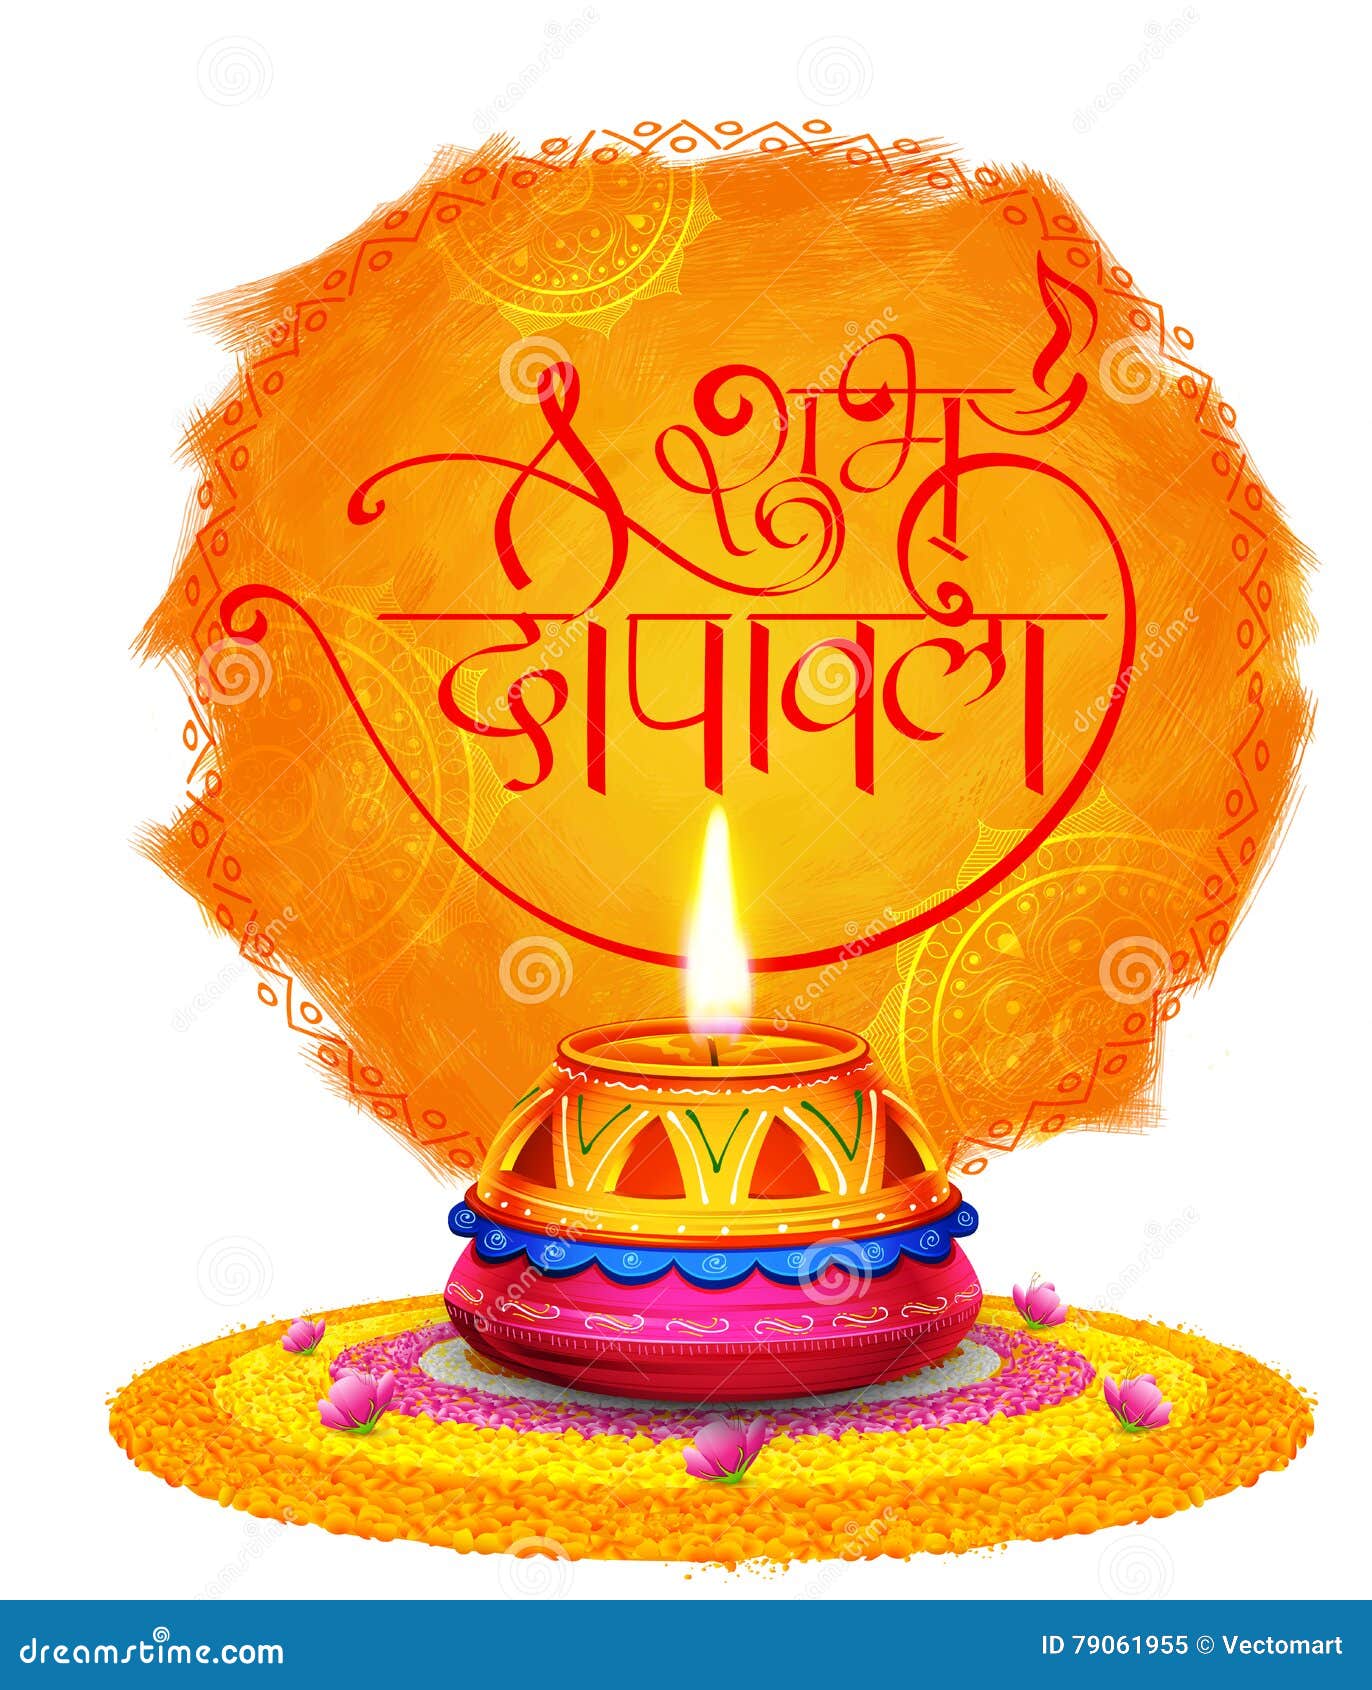 Shubh Deepawali Happy Diwali Background with Watercolor Diya for Light  Festival of India Stock Vector - Illustration of diya, dipawali: 79061955